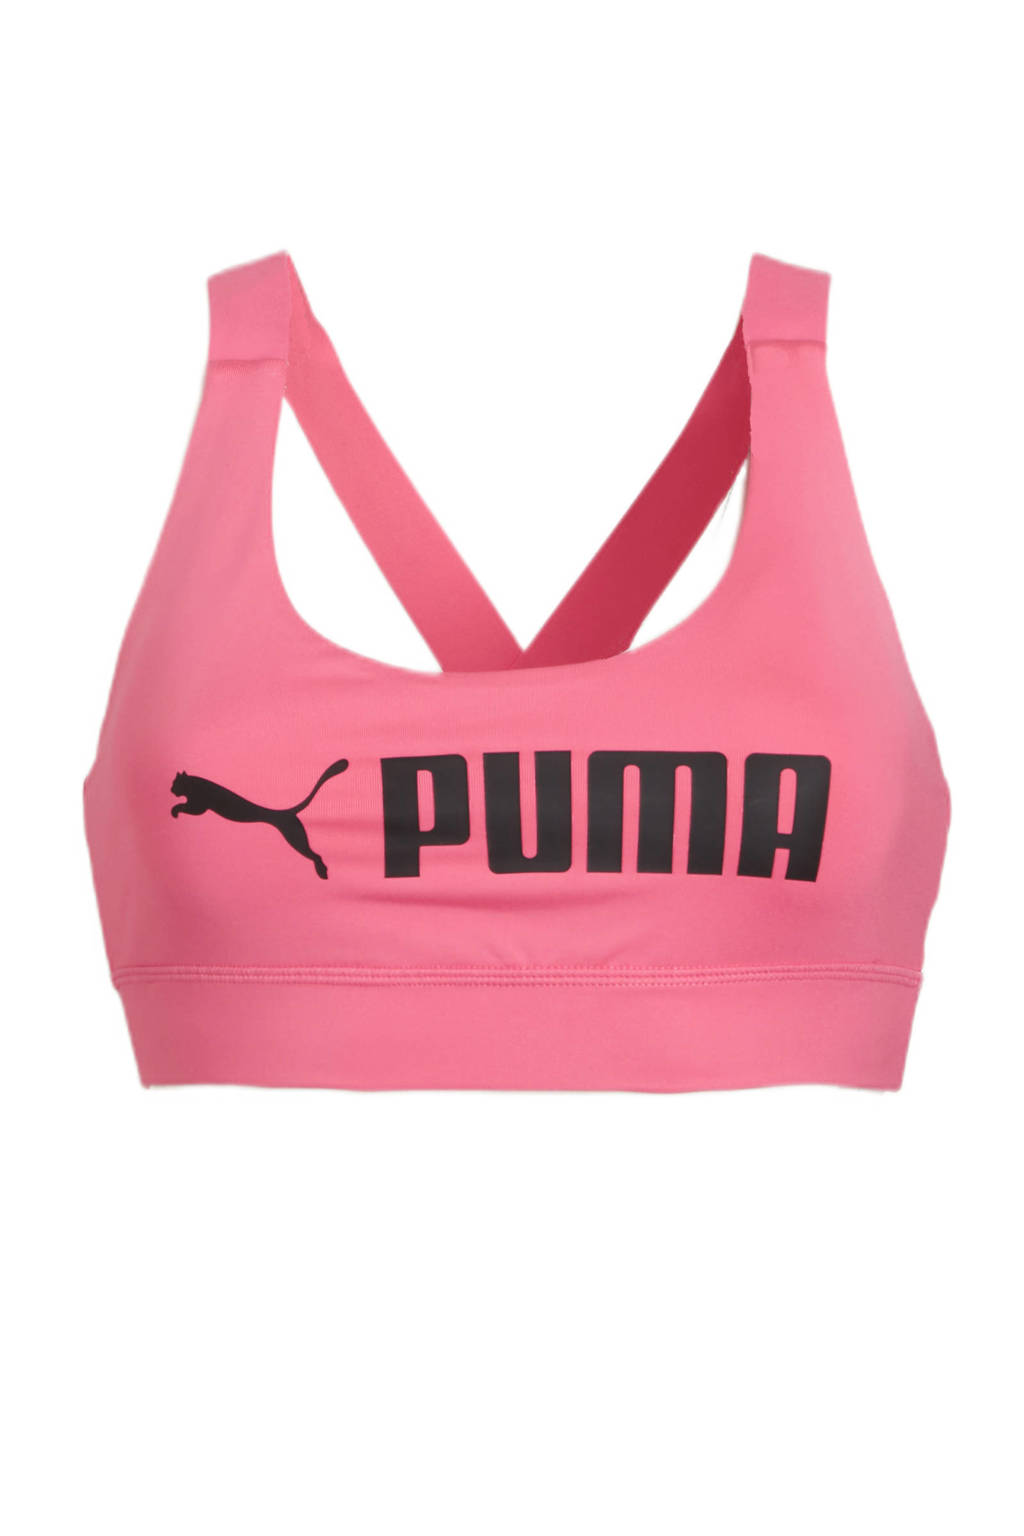 Puma level 2 sportbh roze